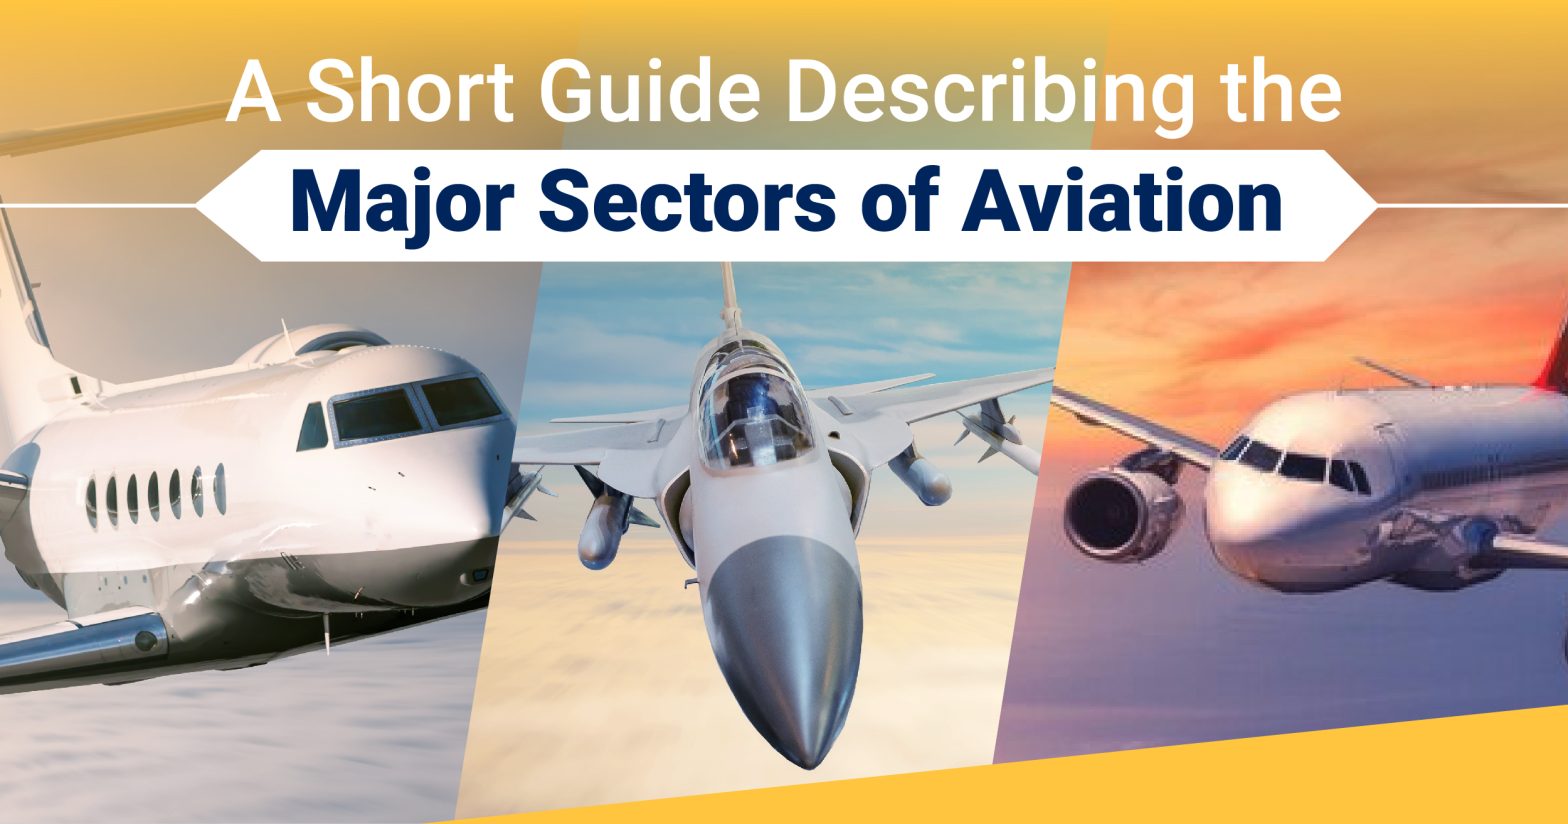 A Short Guide Describing the Major Sectors of Aviation